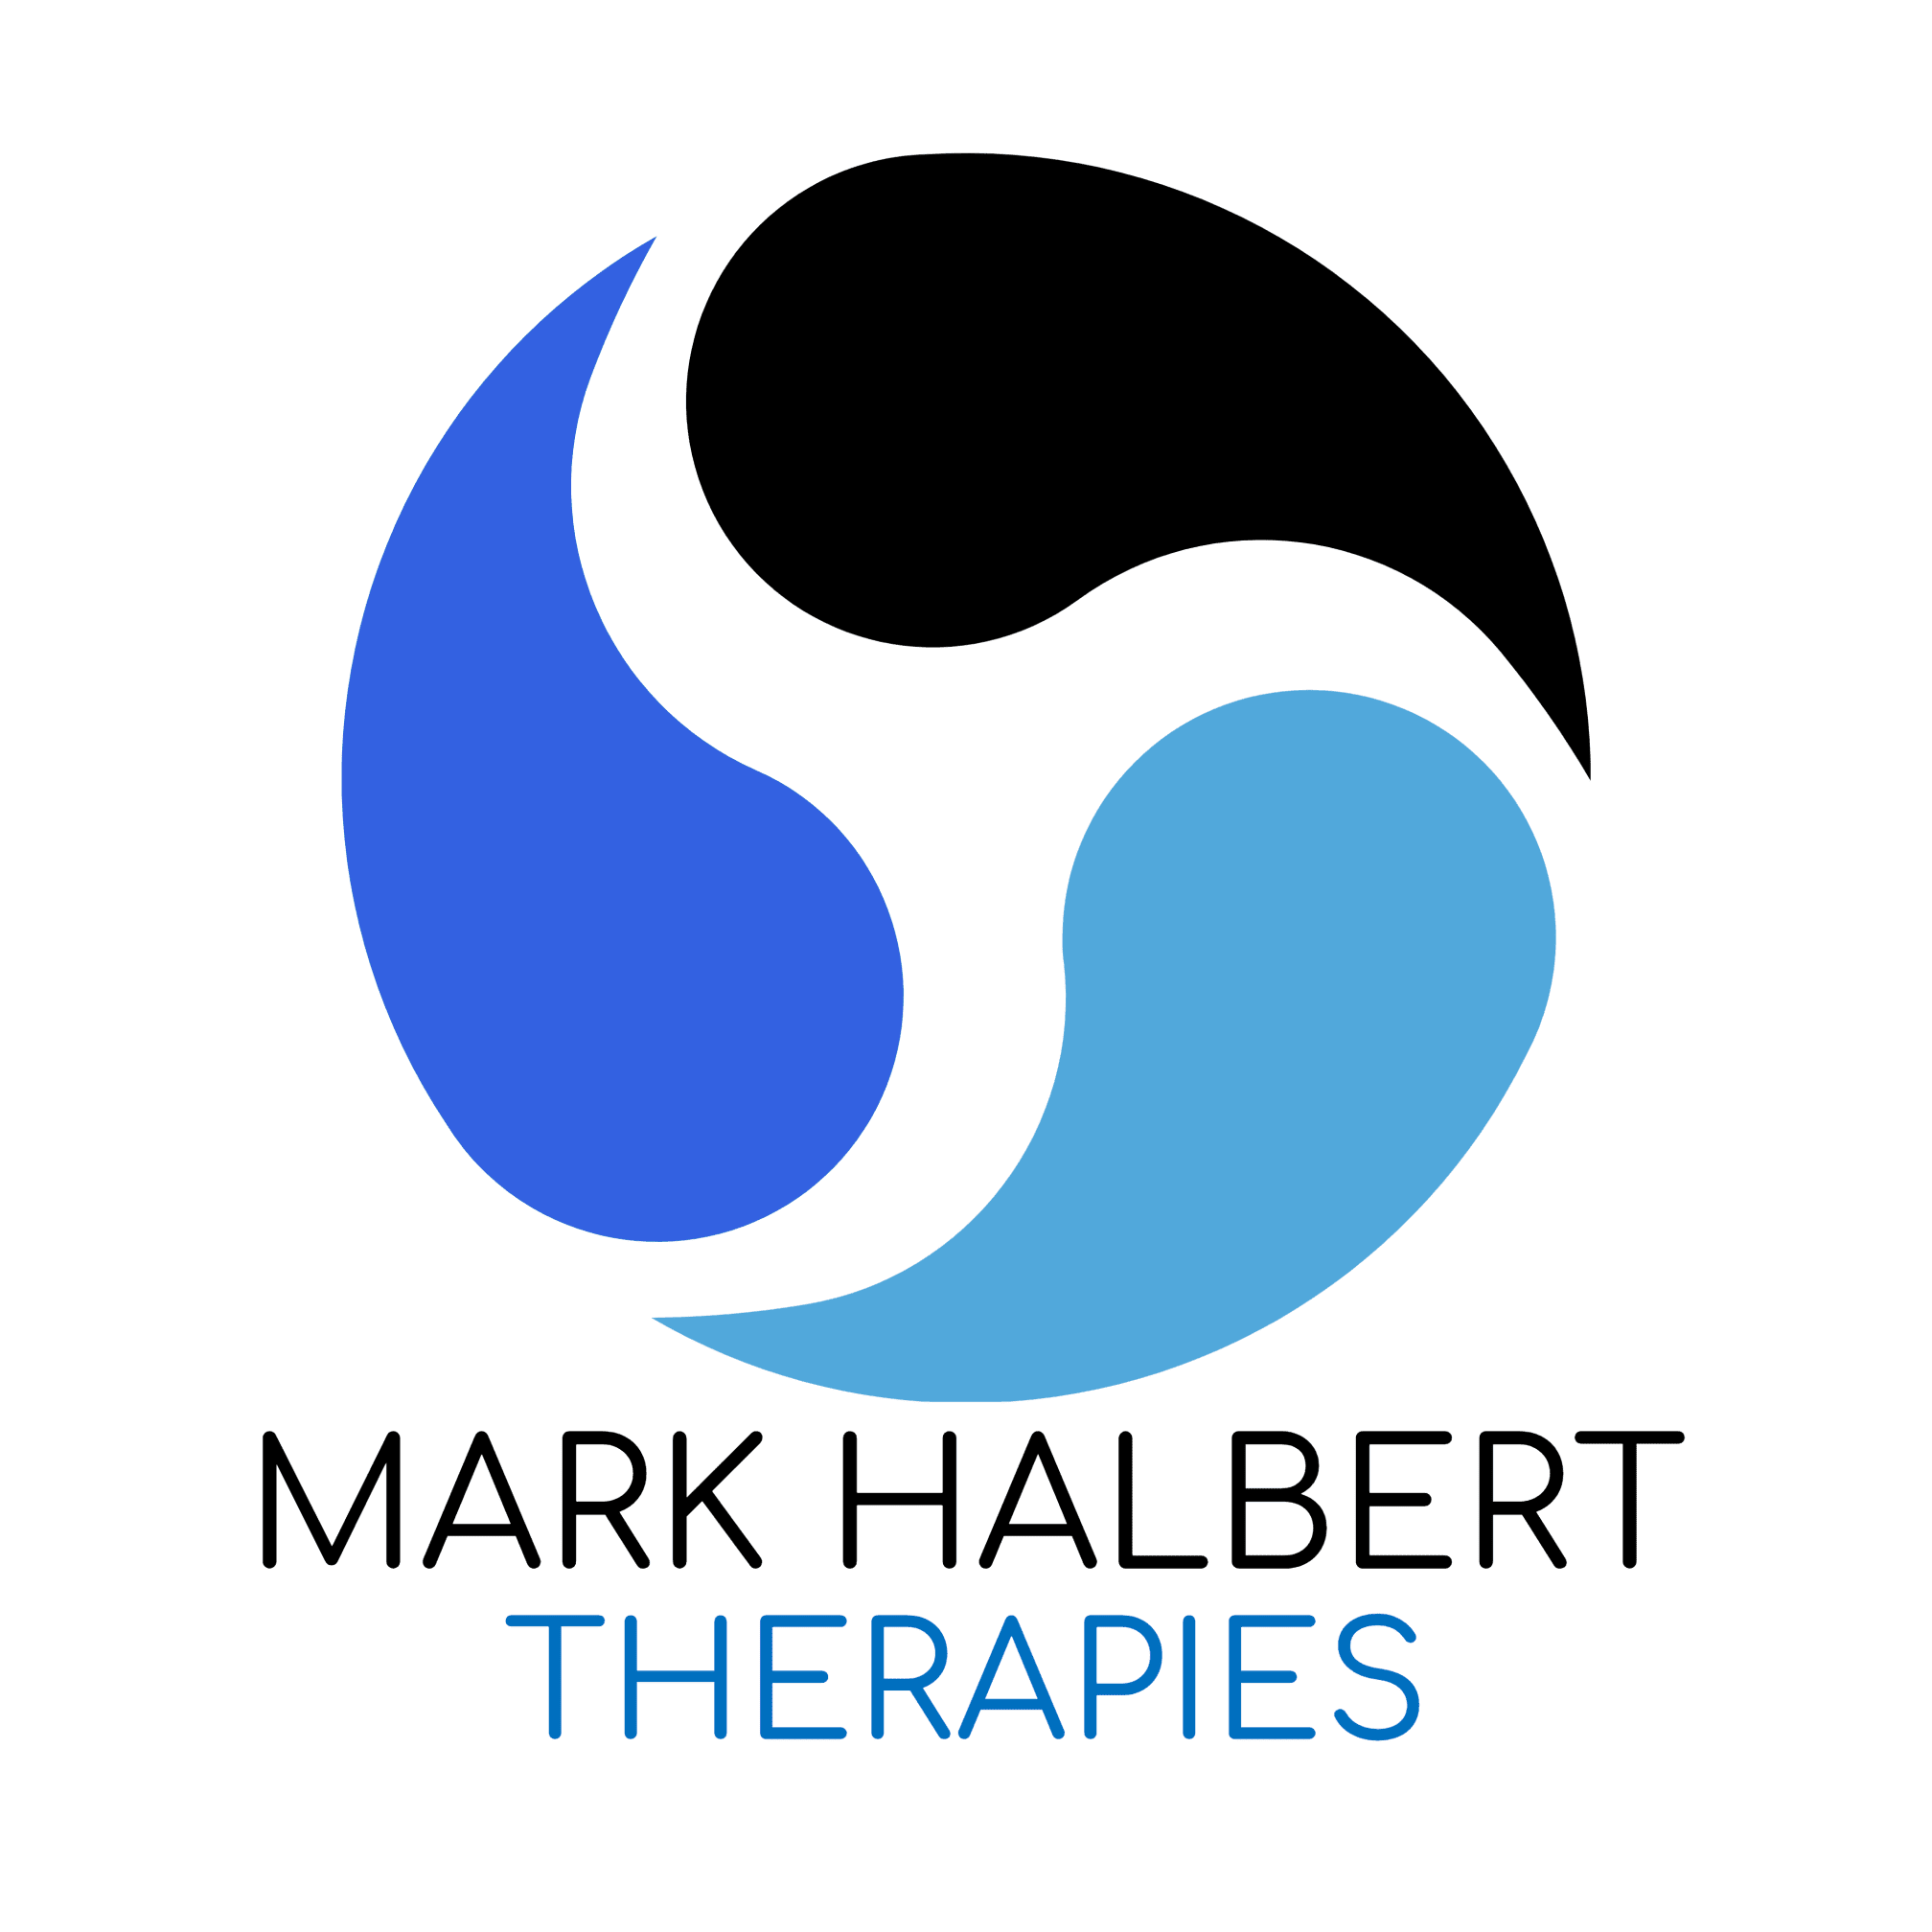 Mark Halbert Therapies logo